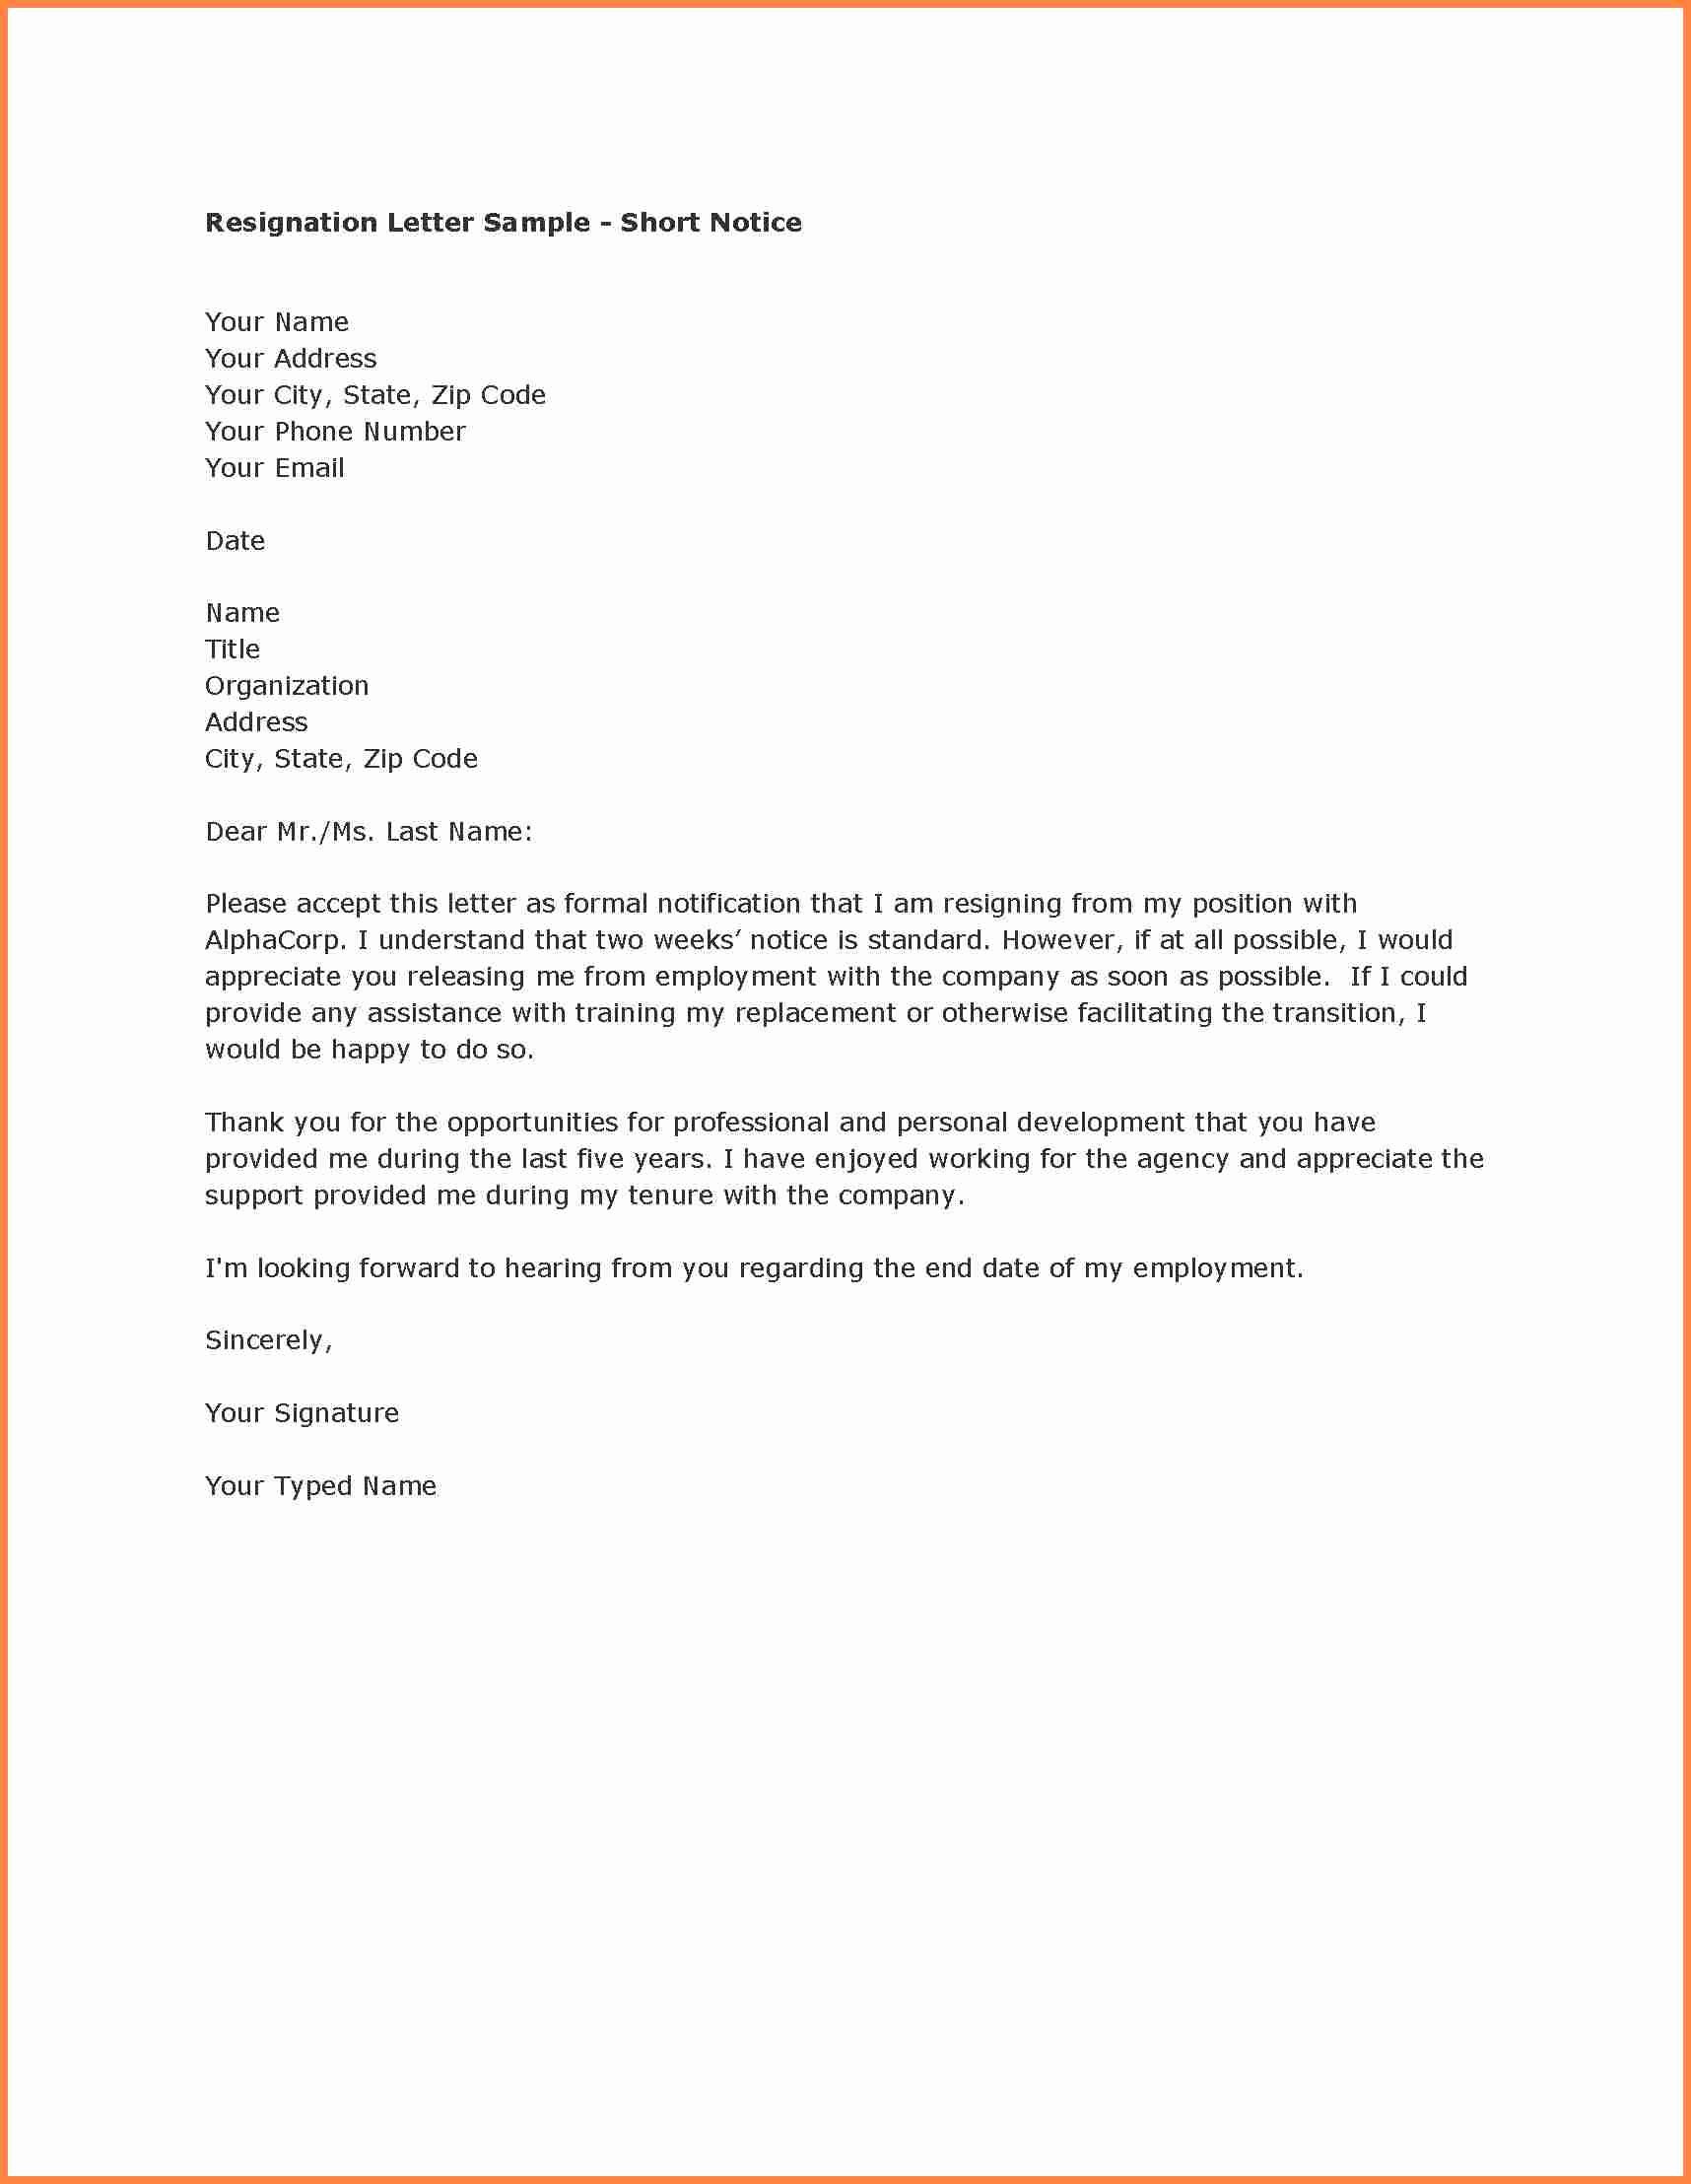 Resign Letter Short Notice Best Of 6 Short Notice Resignation Letter Samples